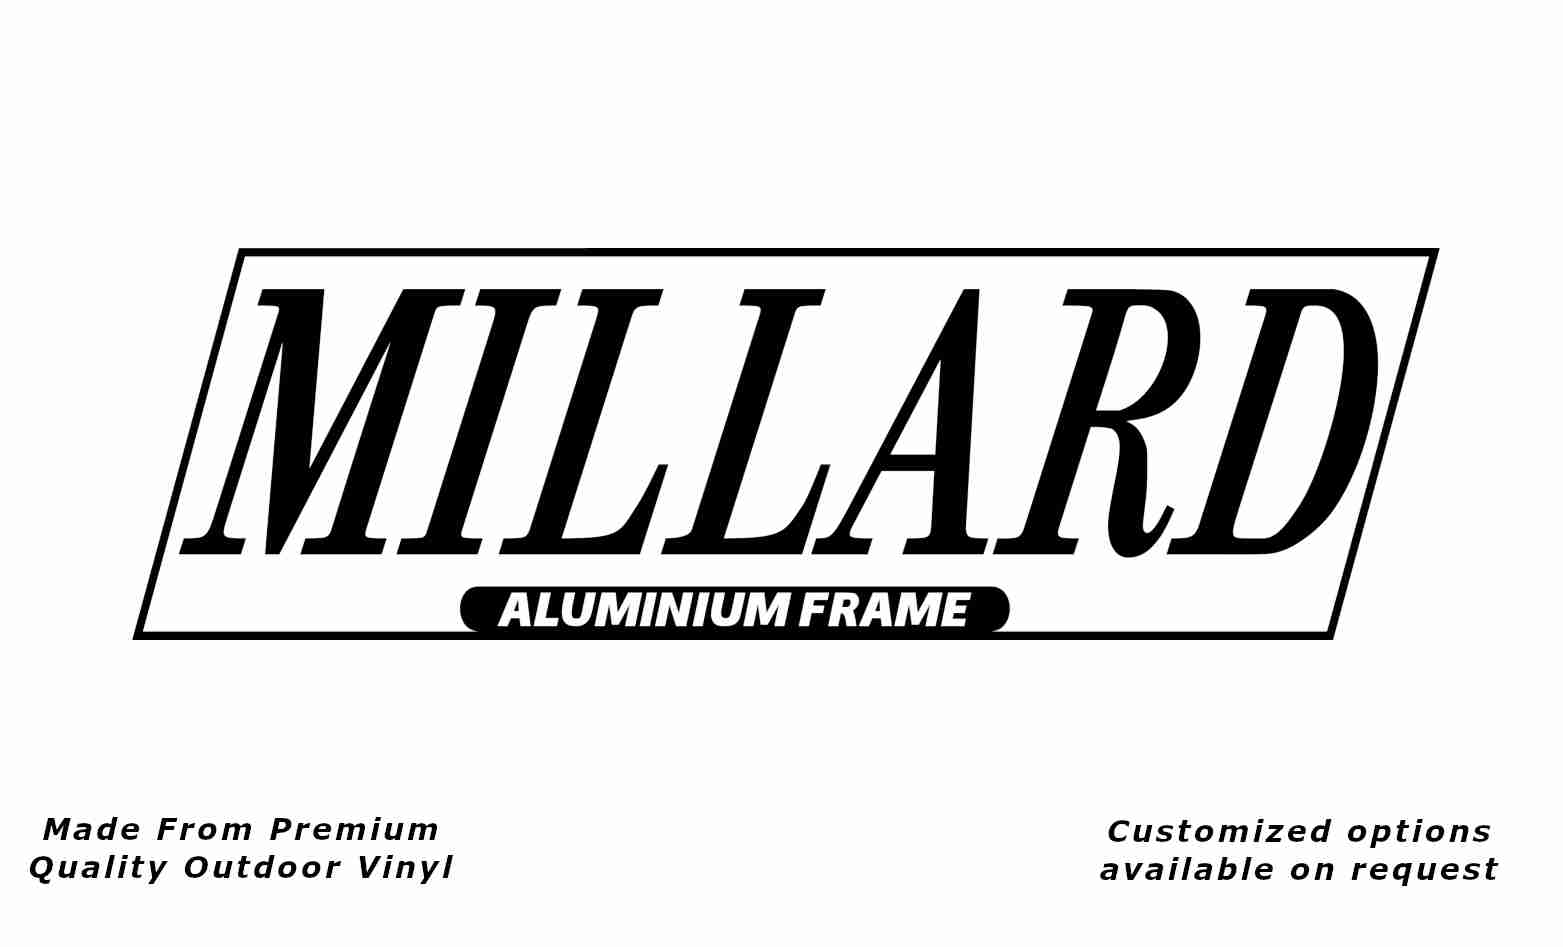 Millard aluminium frame caravan vinyl replacement decal sticker in black.